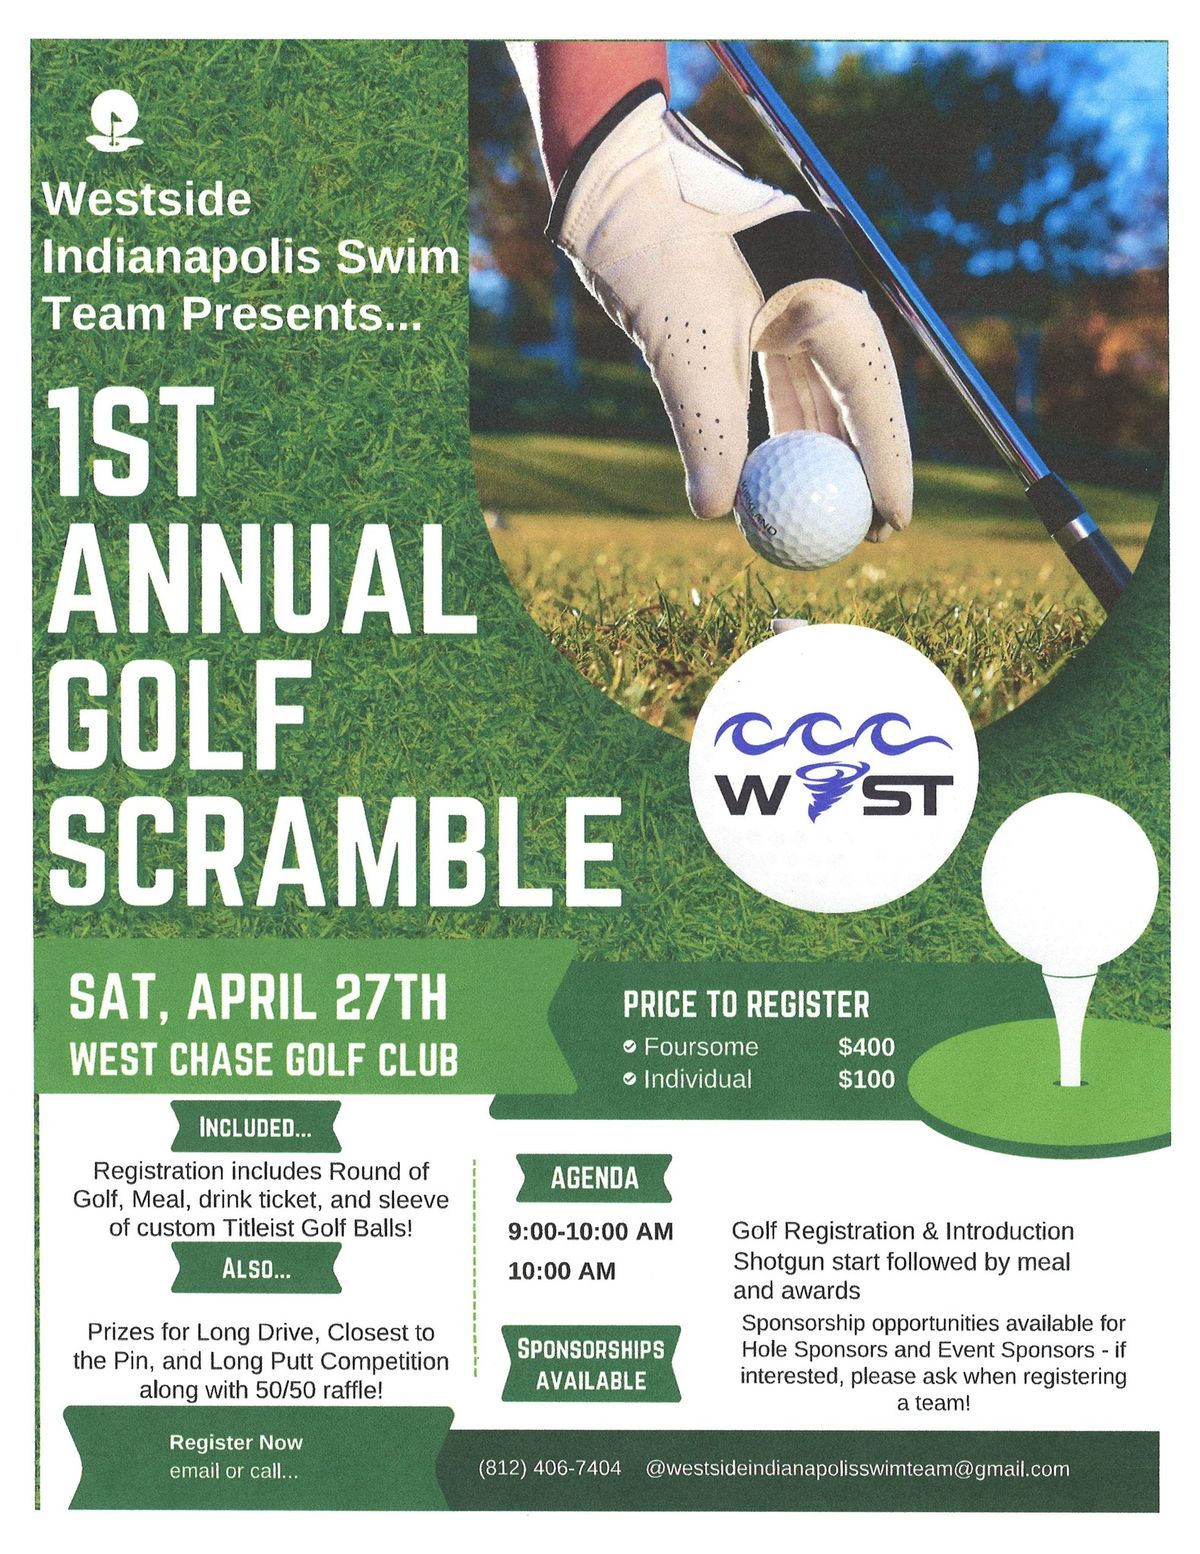 Westside Indianapolis Swim Team Golf Outing